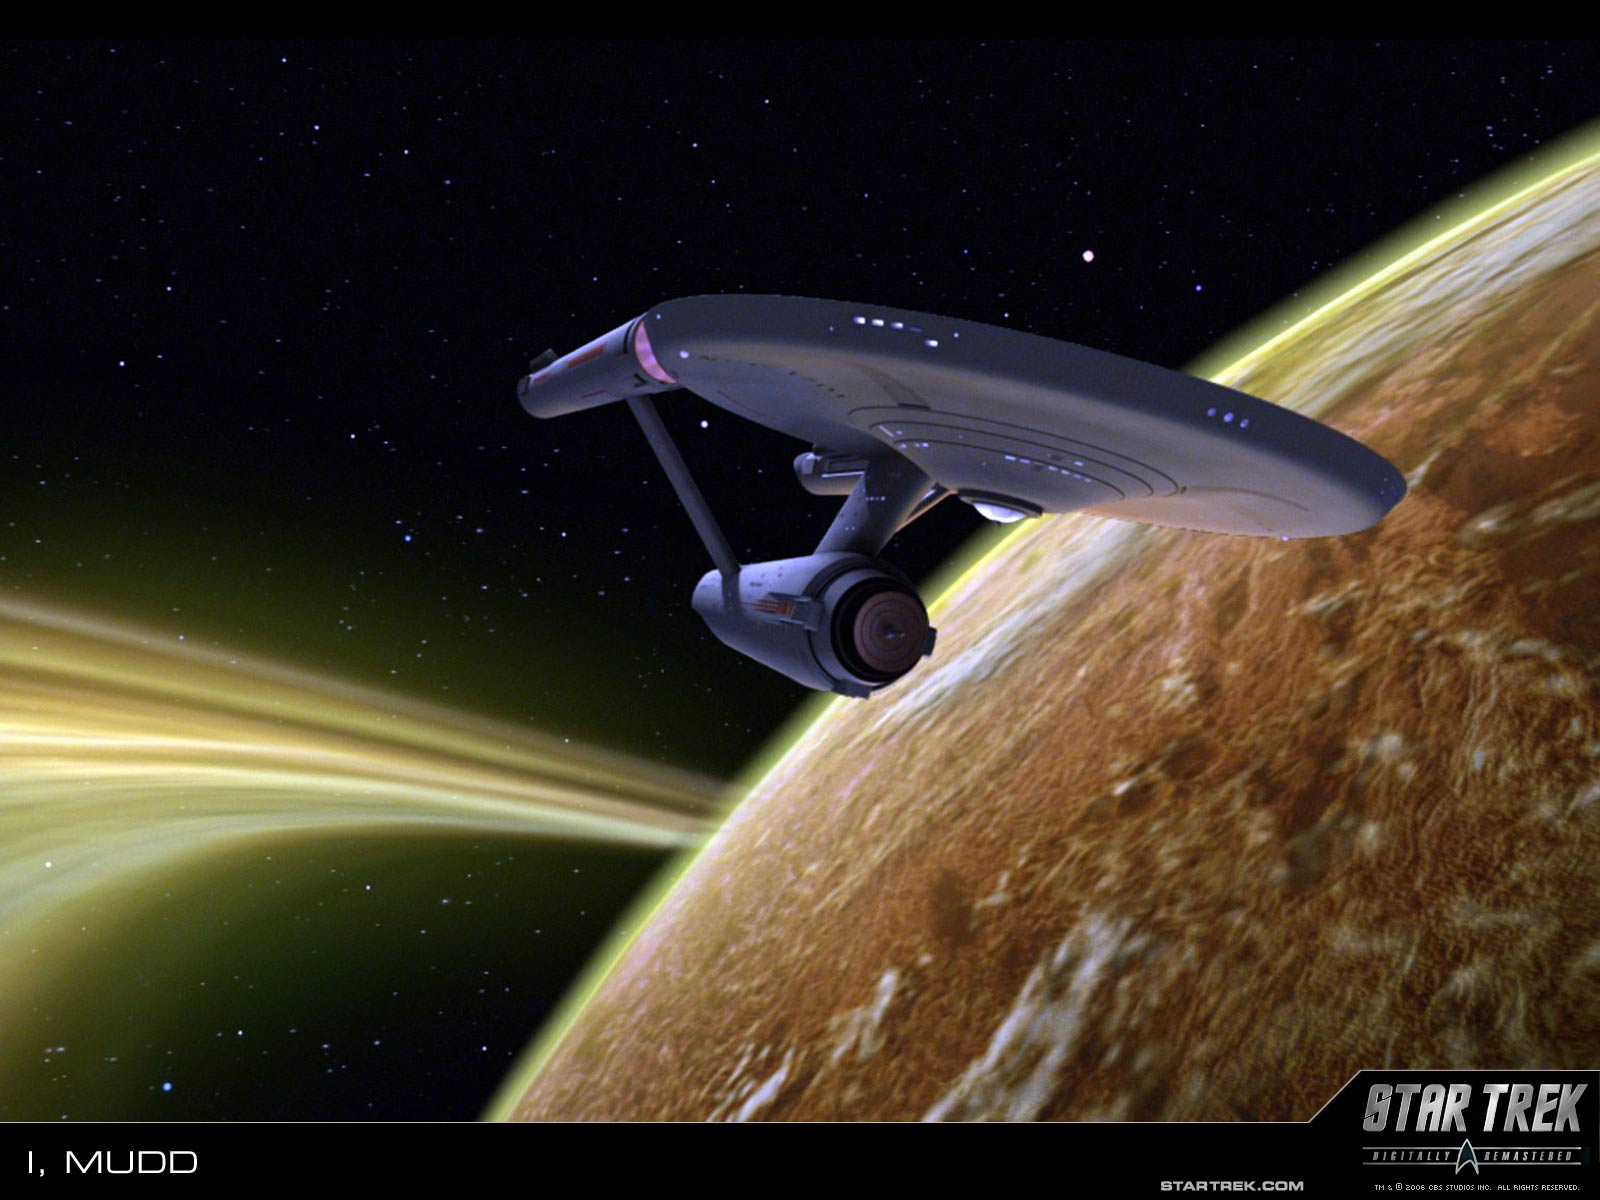 Star Trek Original Series Wallpaper Imgderp